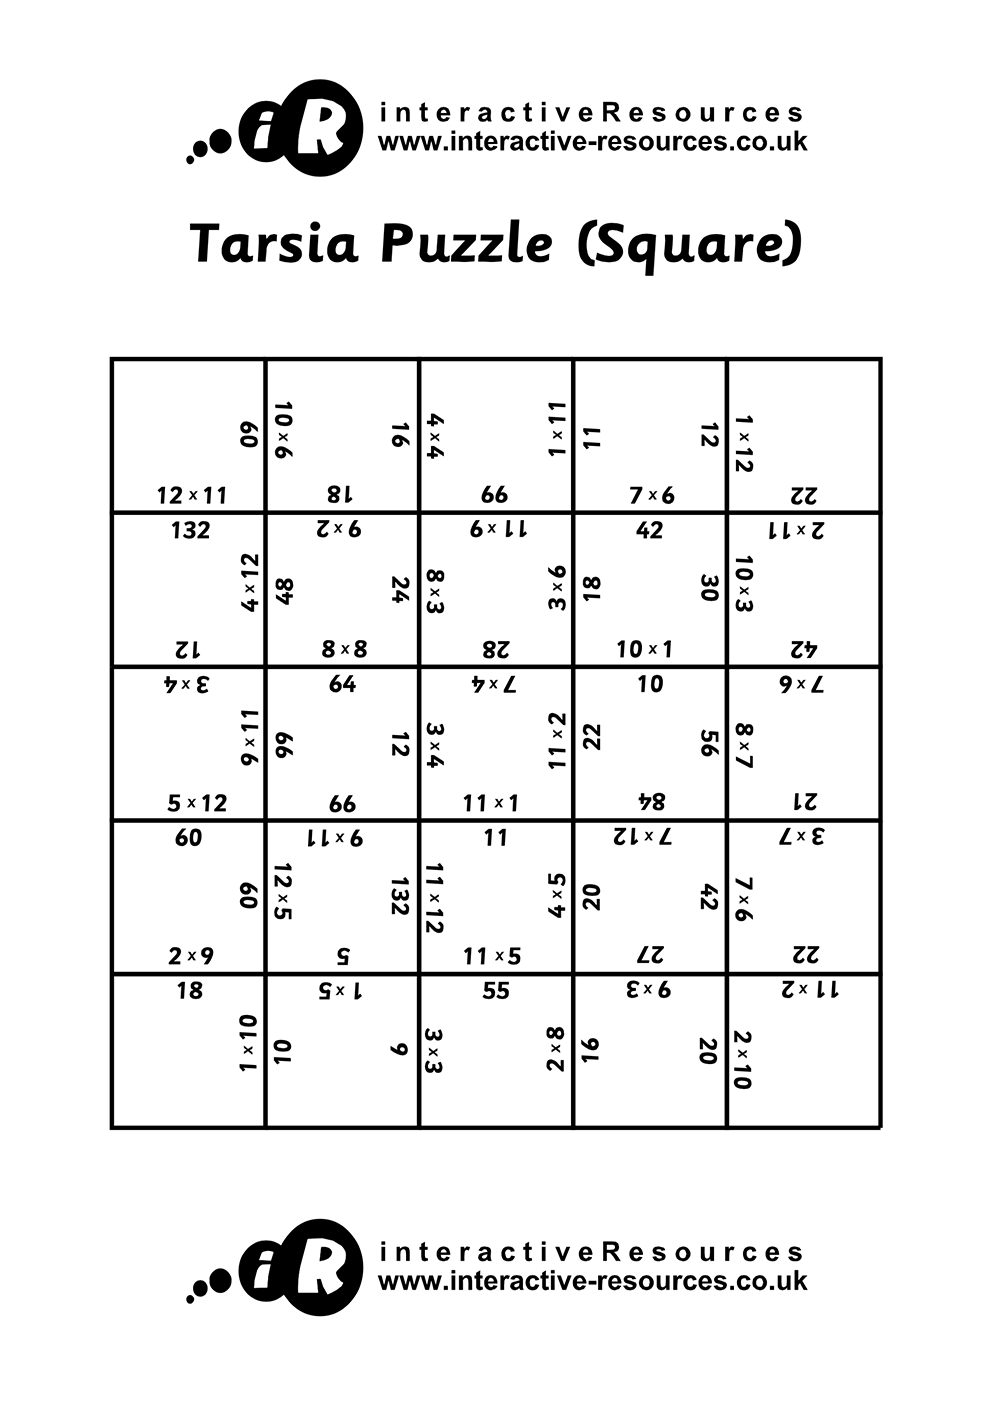 Tarsia Puzzle Square